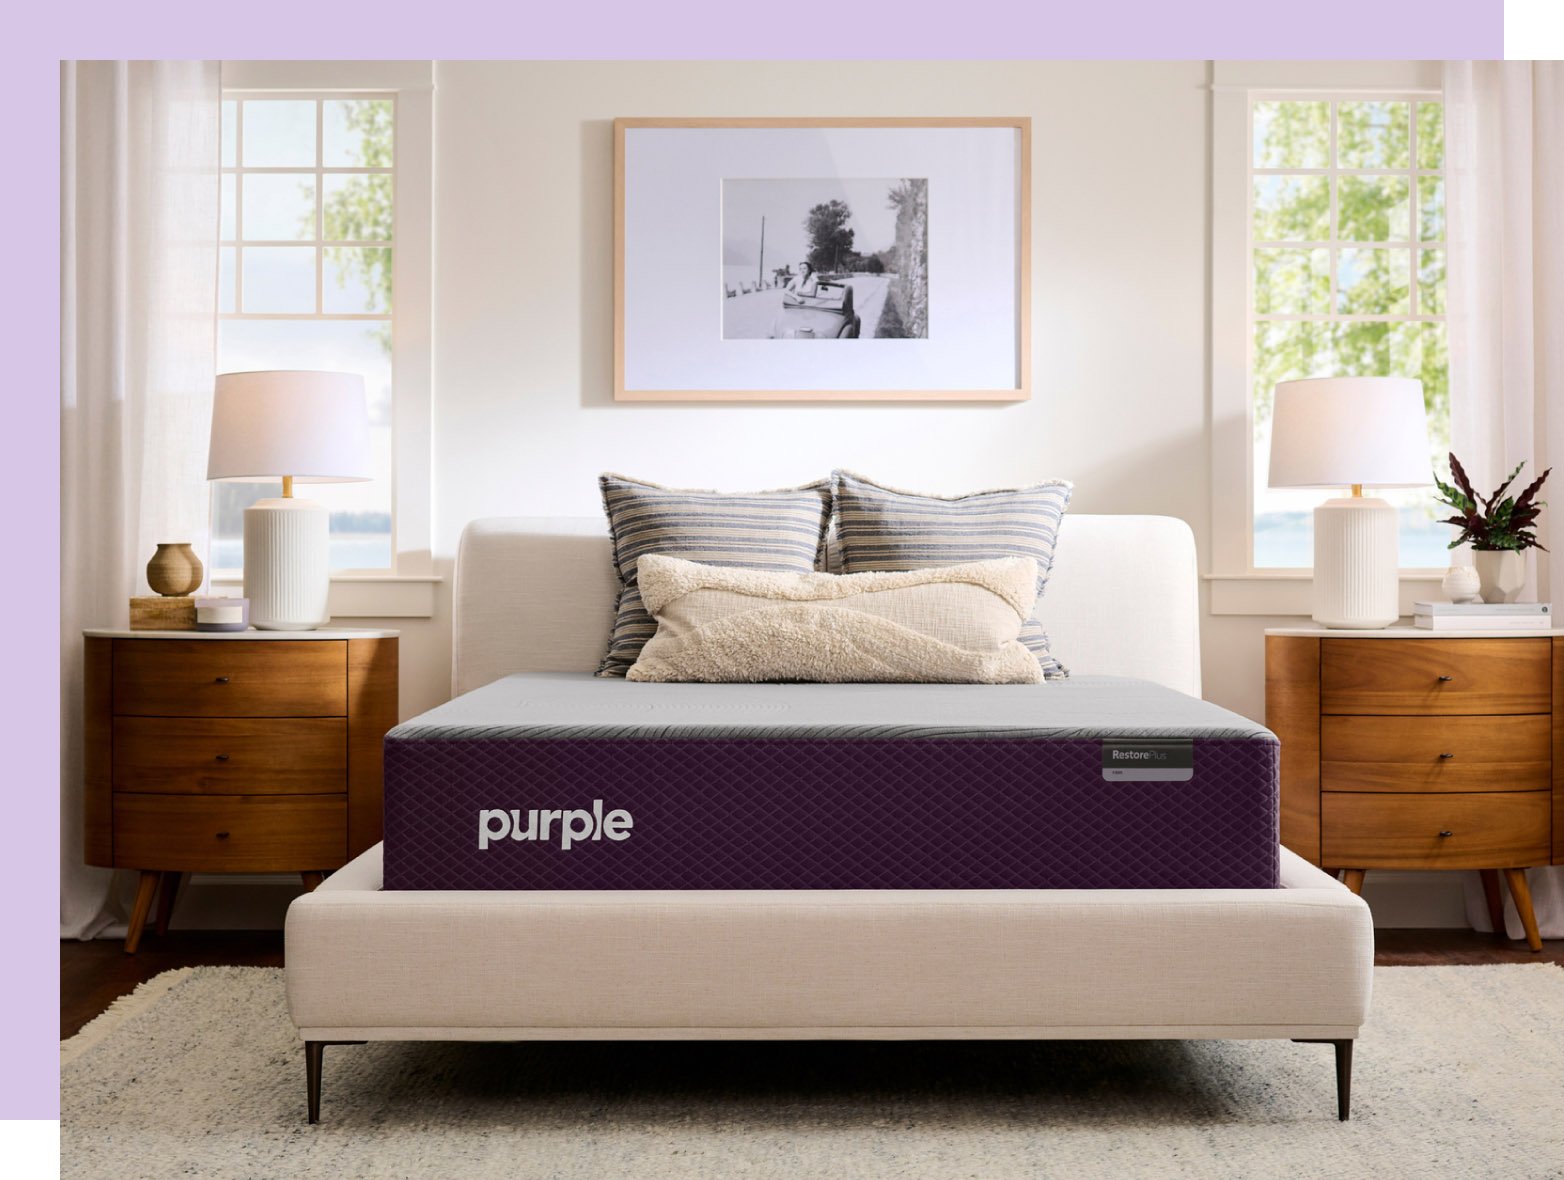 Purple RestorePlus mattress for back sleepers.